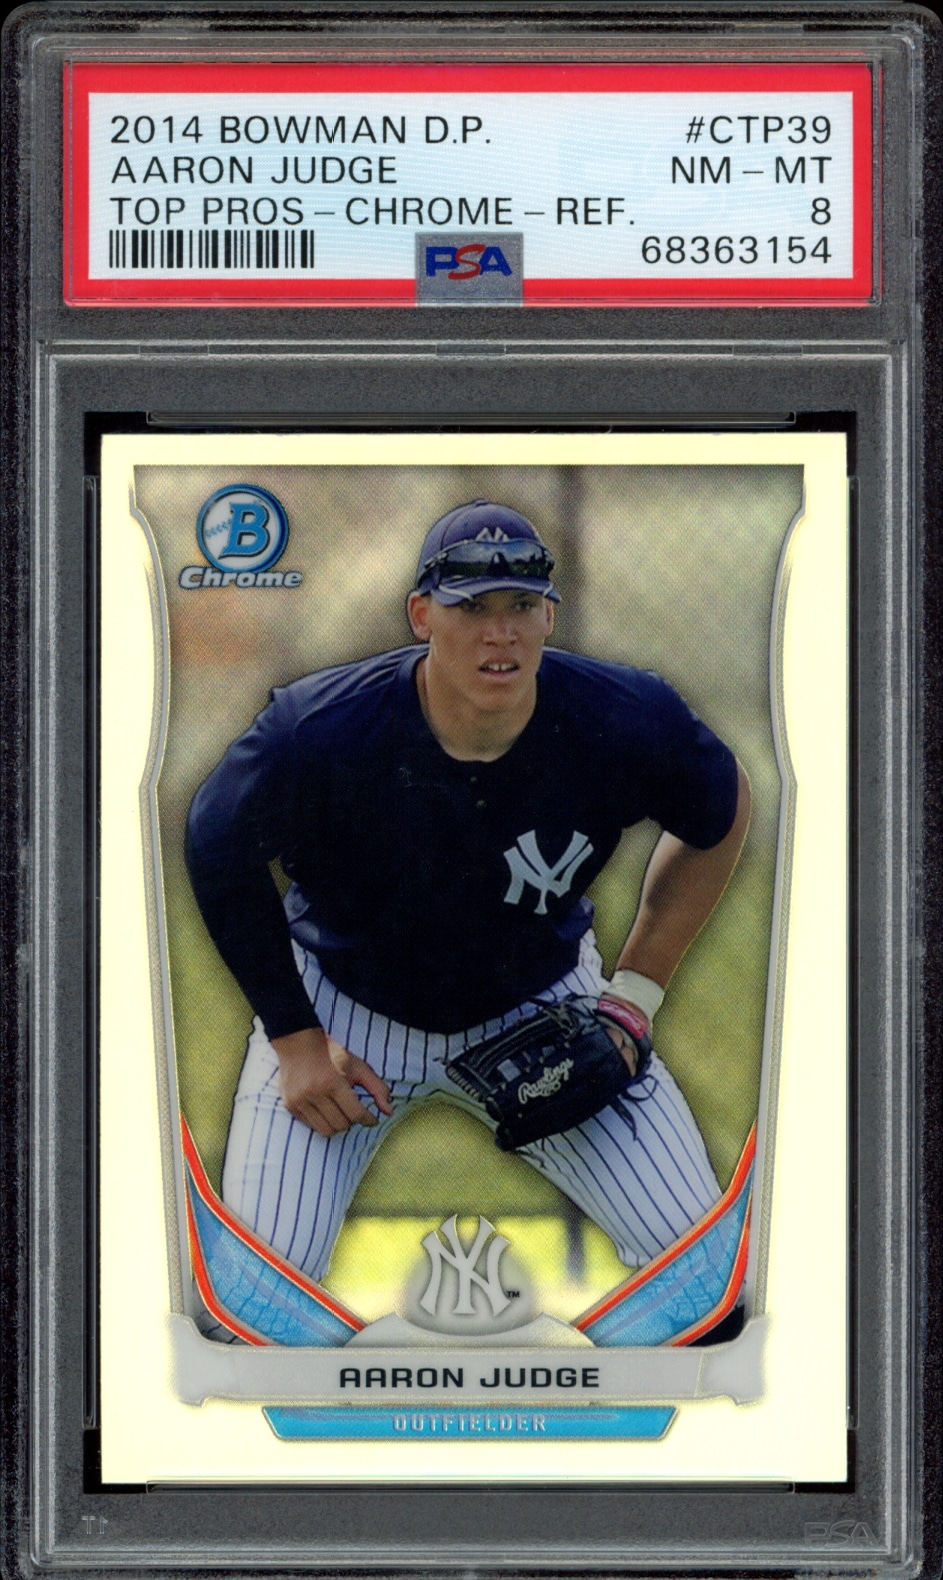 Graded PSA 8, Aaron Judges 2014 Bowman Chrome card in Yankees gear.